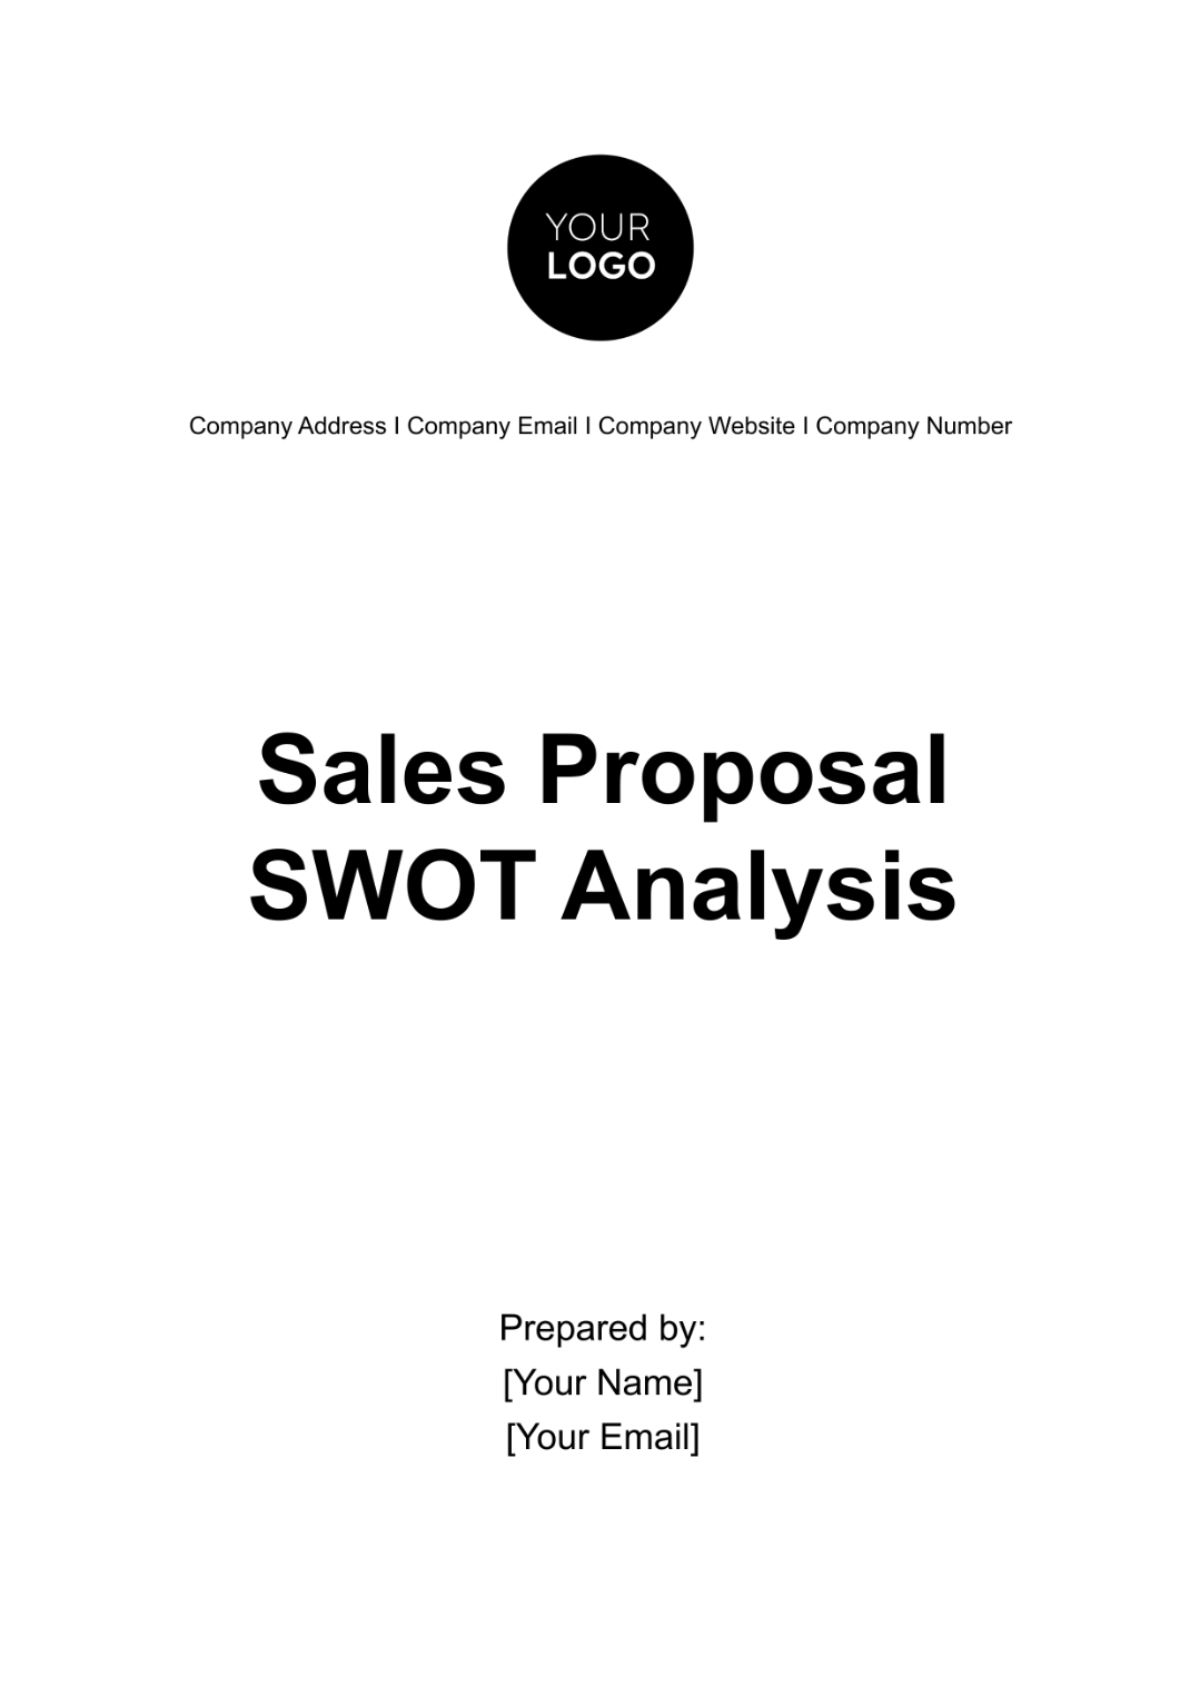 Free Sales Proposal SWOT Analysis Template